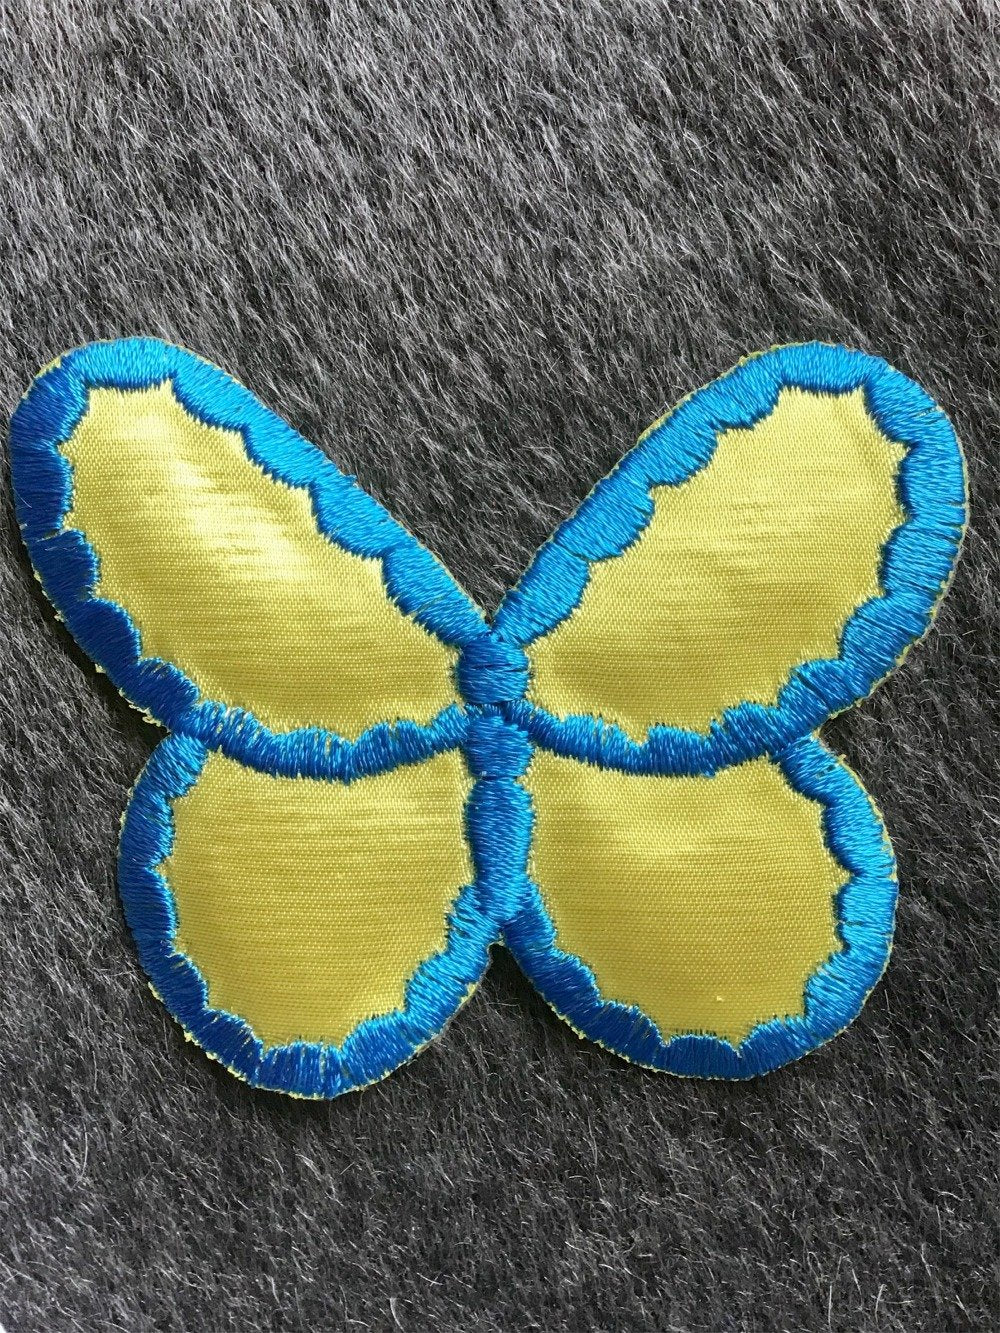 Blue Yellow Applique Vintage Butterfly Decorative Patch #5085